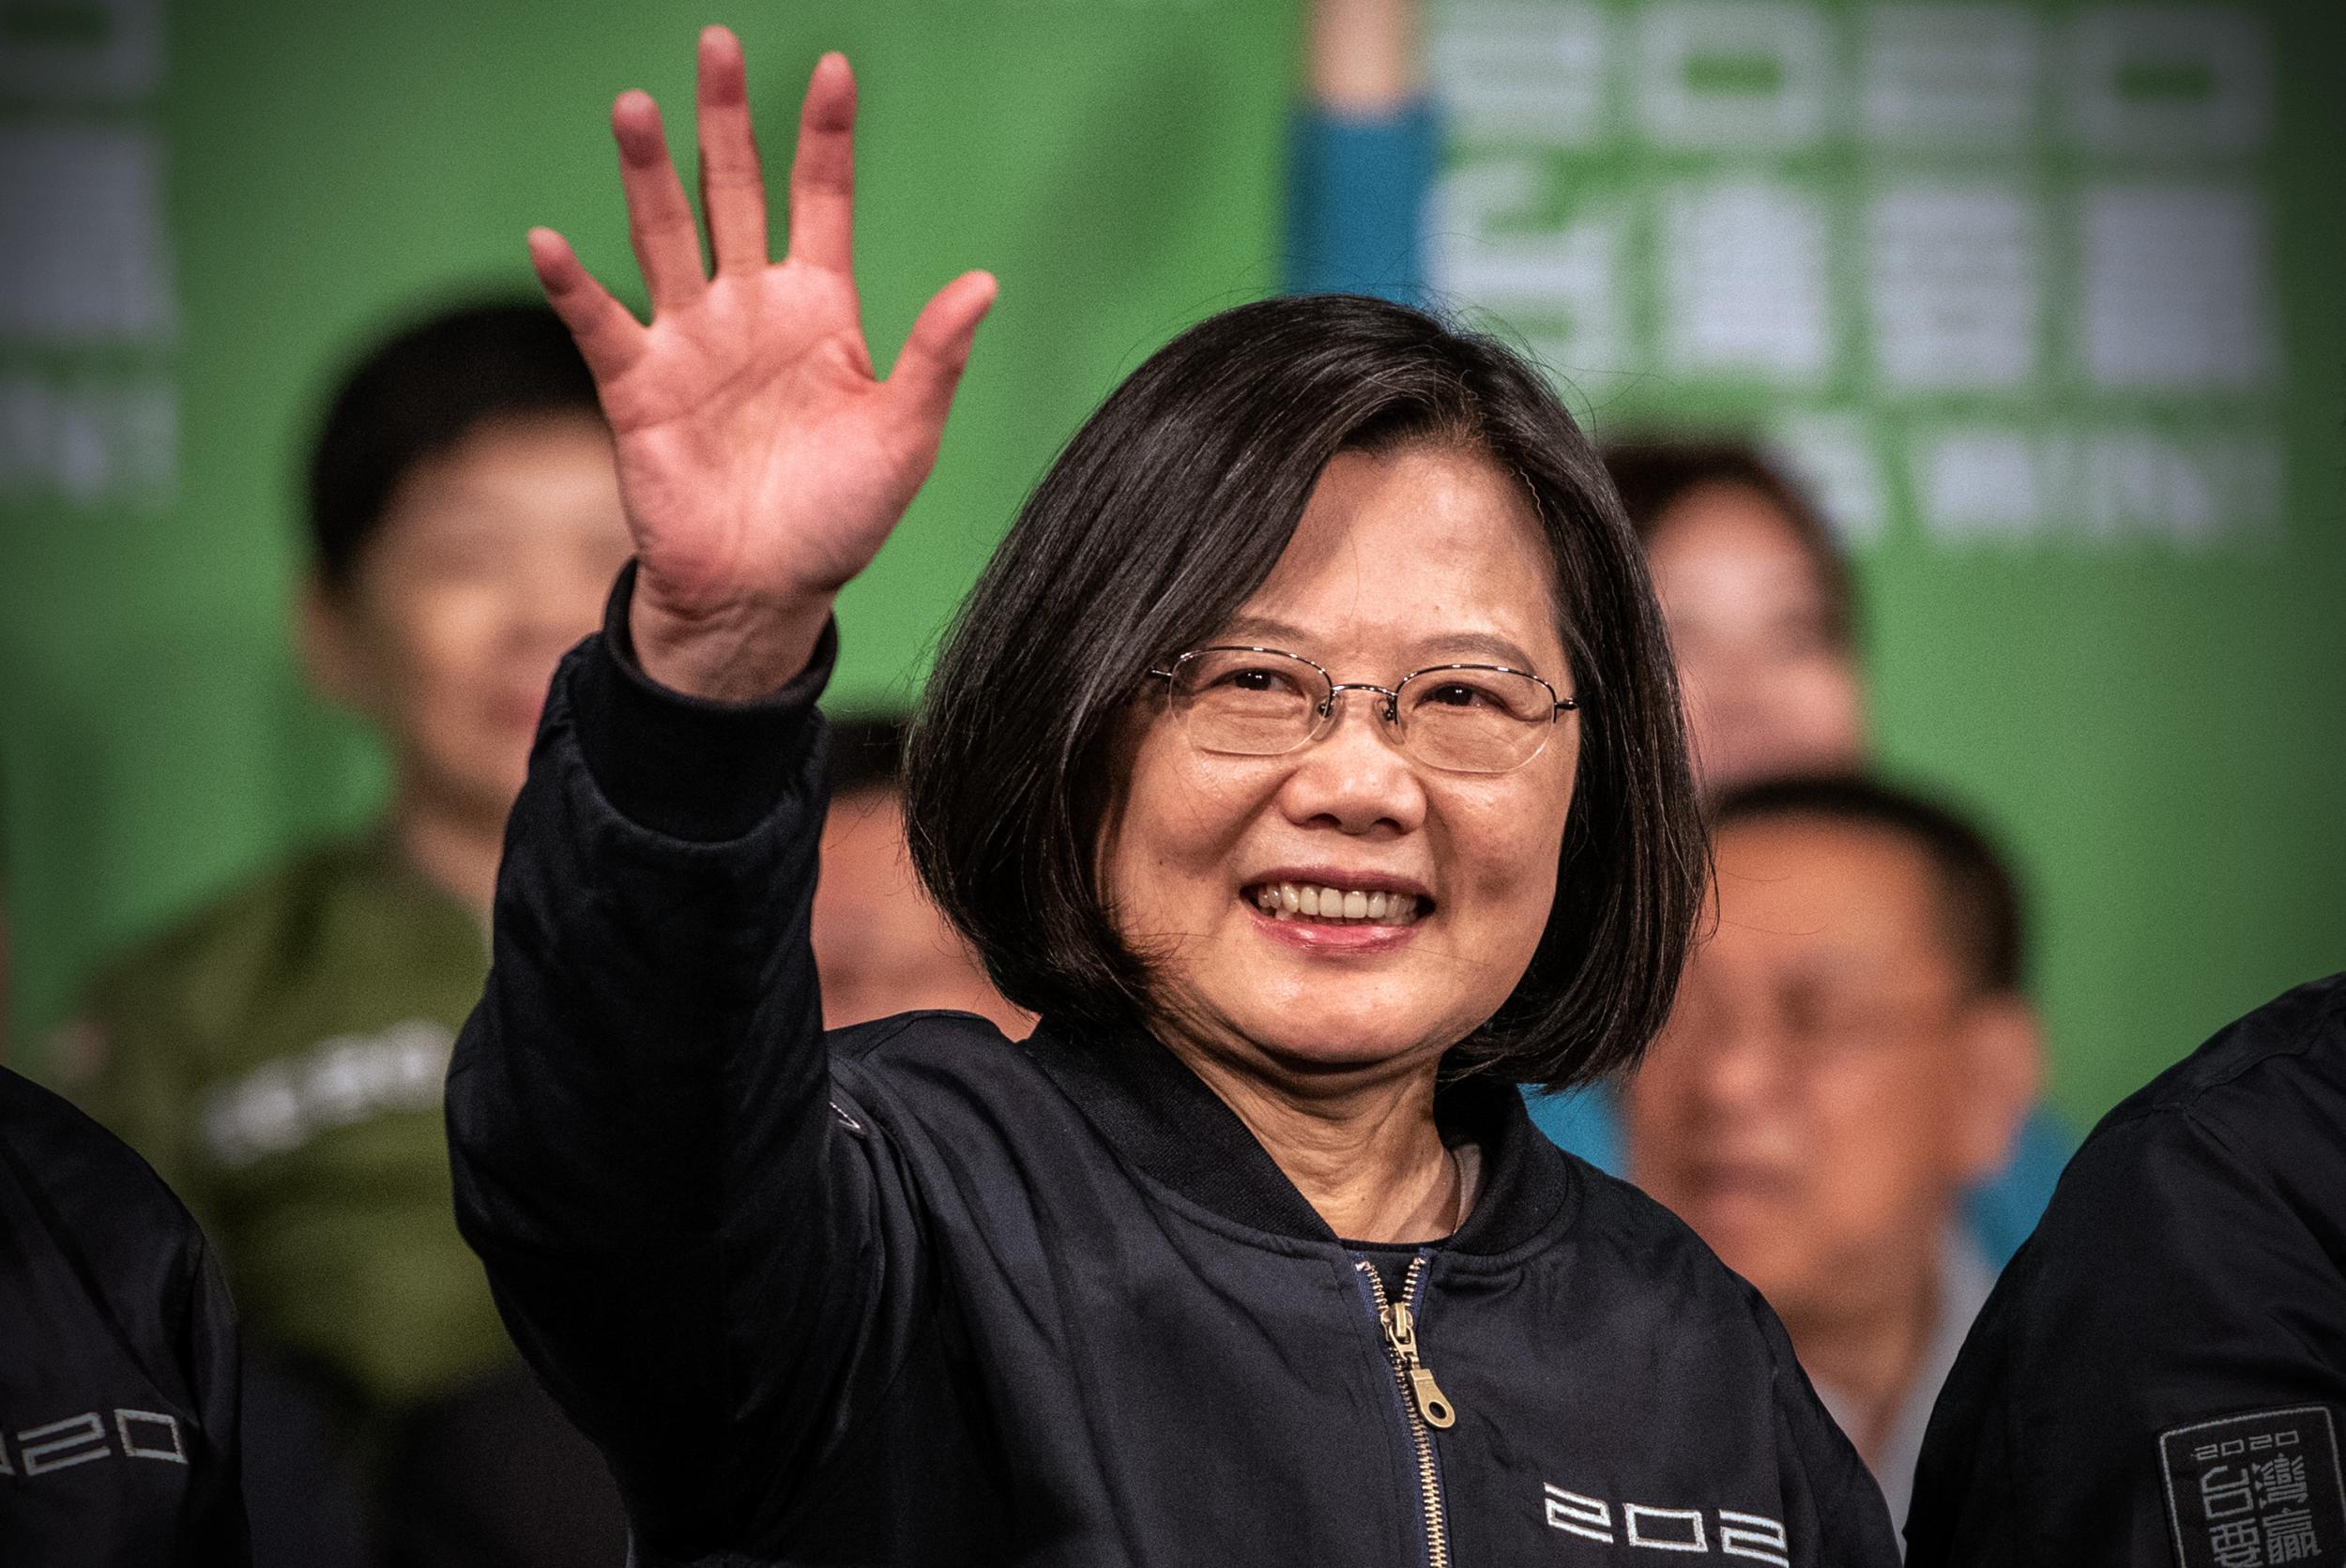 China views Taiwan's president, Tsai Ing-wen, as a separatist bent on formal independence